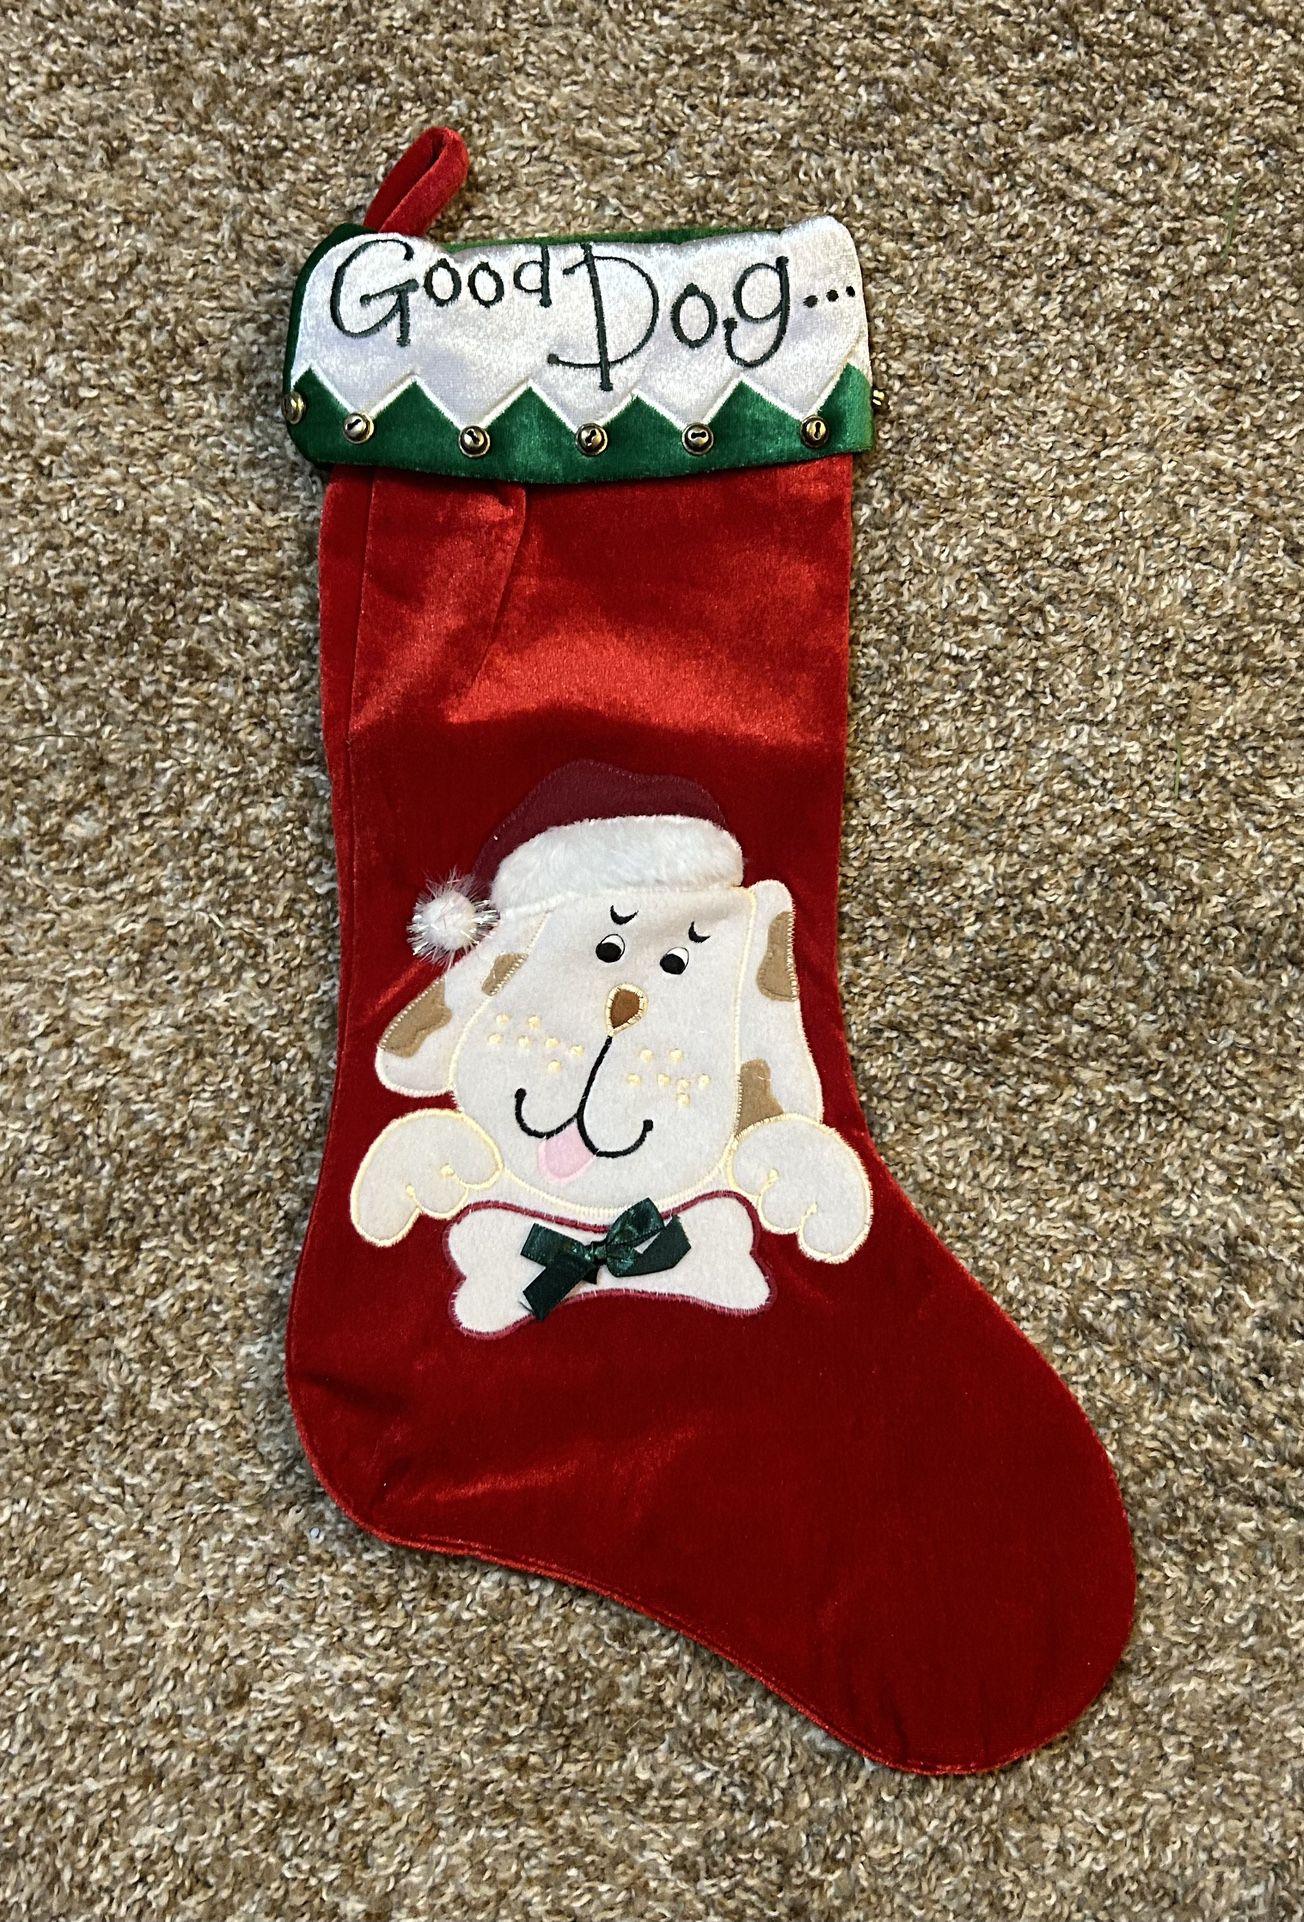 Good Dog stocking 